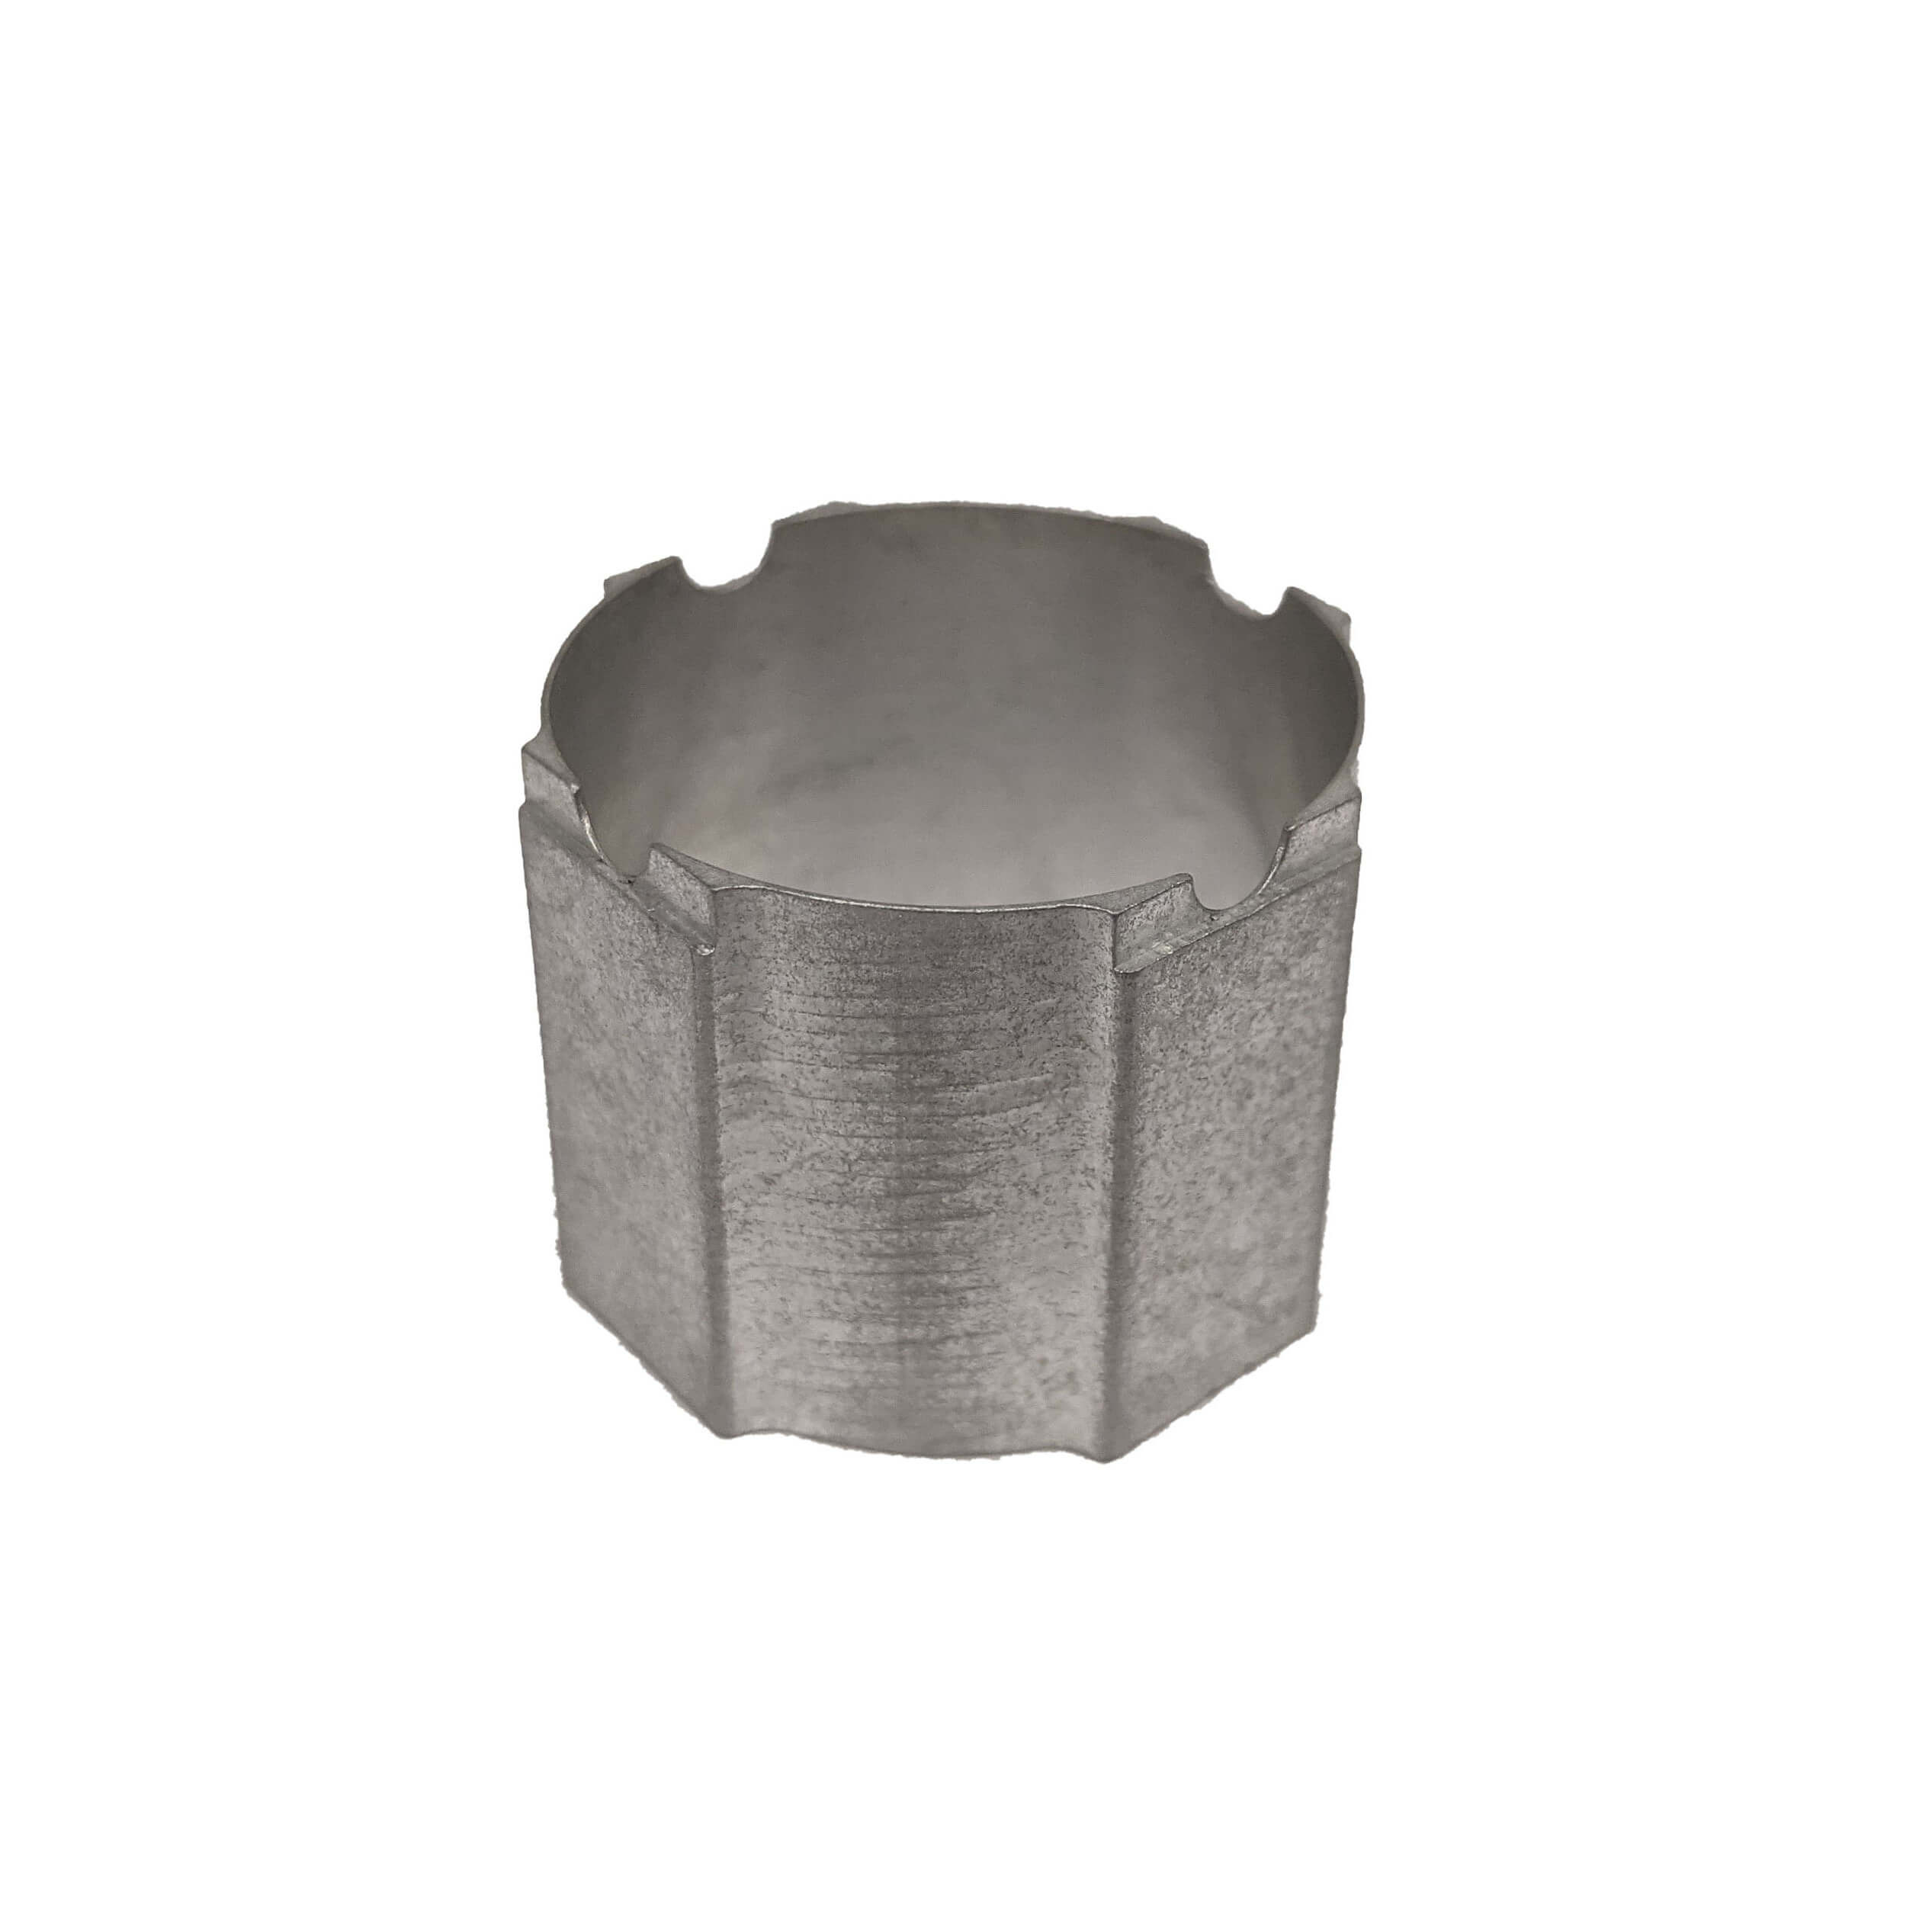 Проставка Cannondale для ресета алюмінієва на вилку Lefty Hyb32, 26.0 мм (KH097) фото 